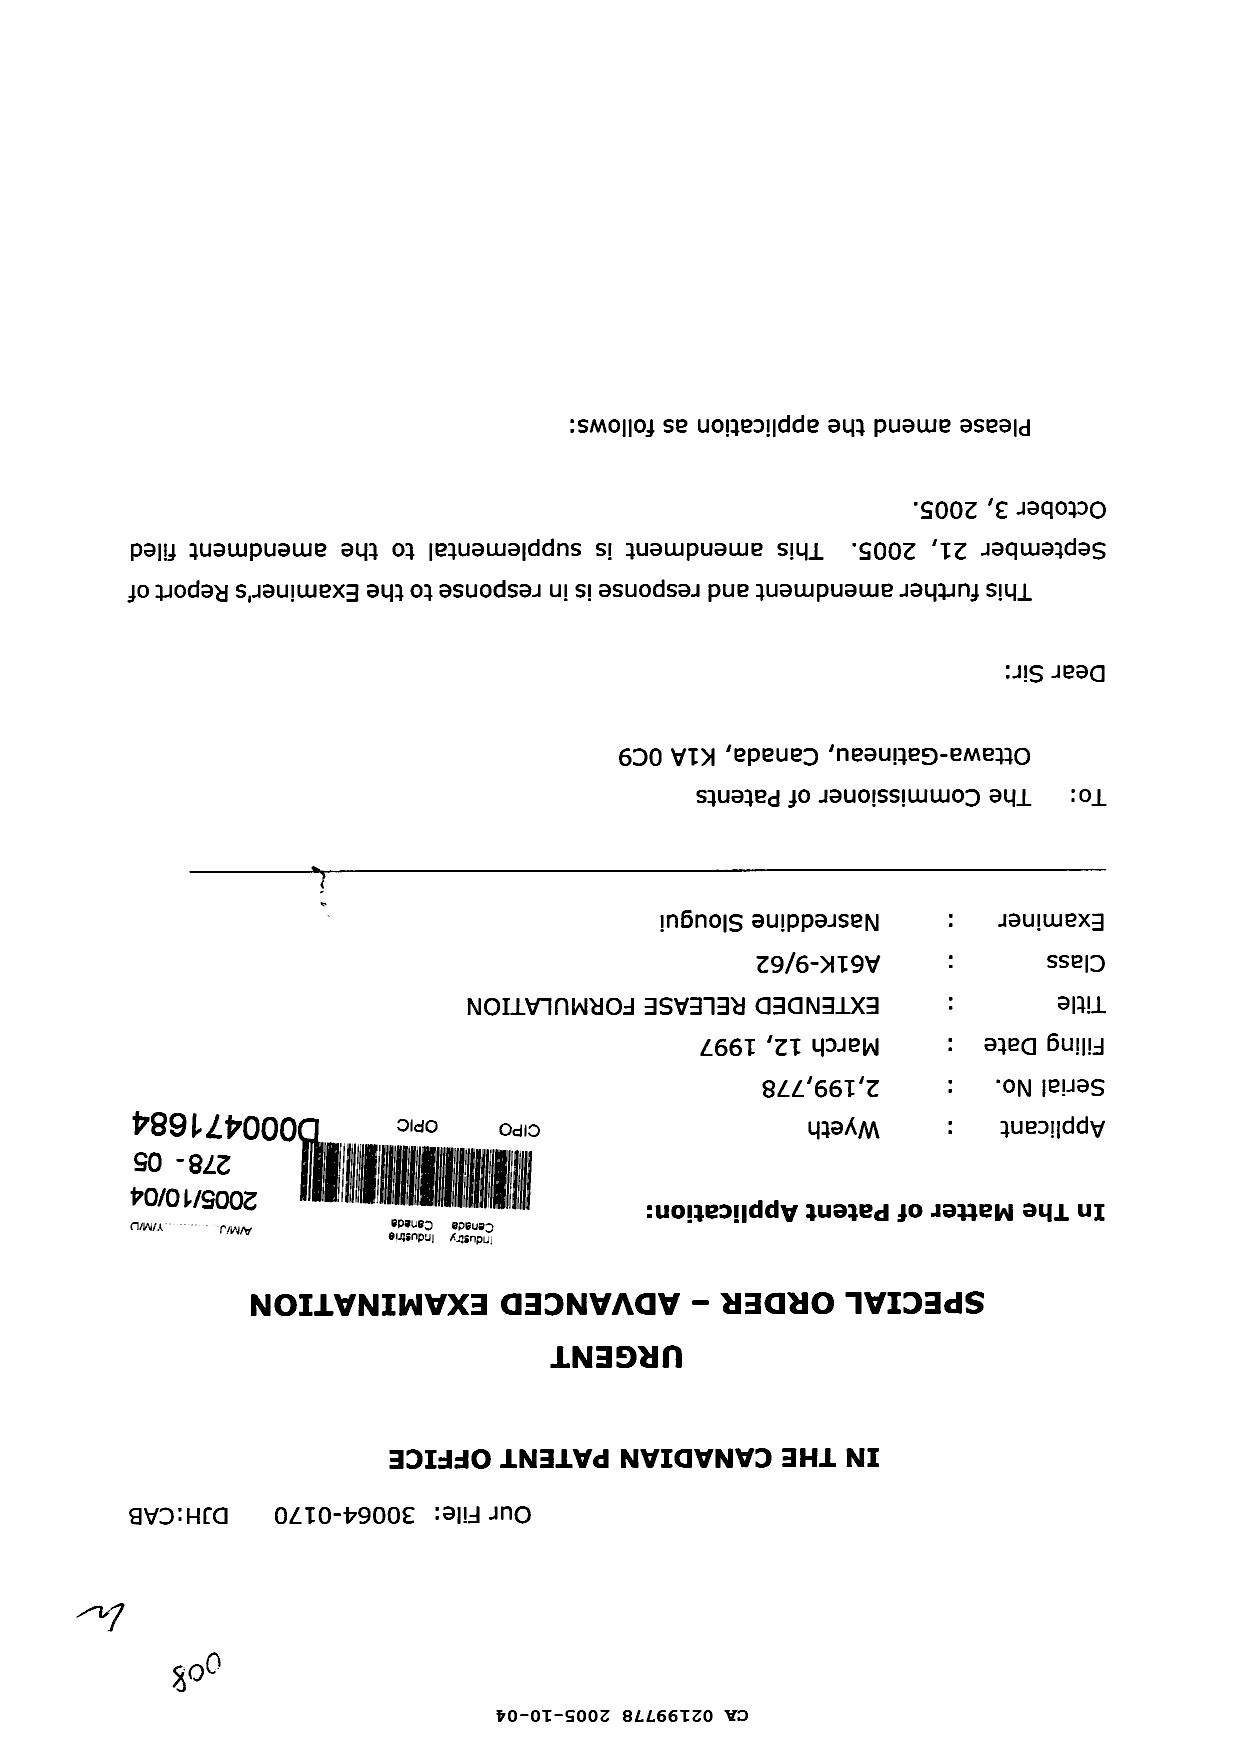 Canadian Patent Document 2199778. Prosecution-Amendment 20041204. Image 1 of 7